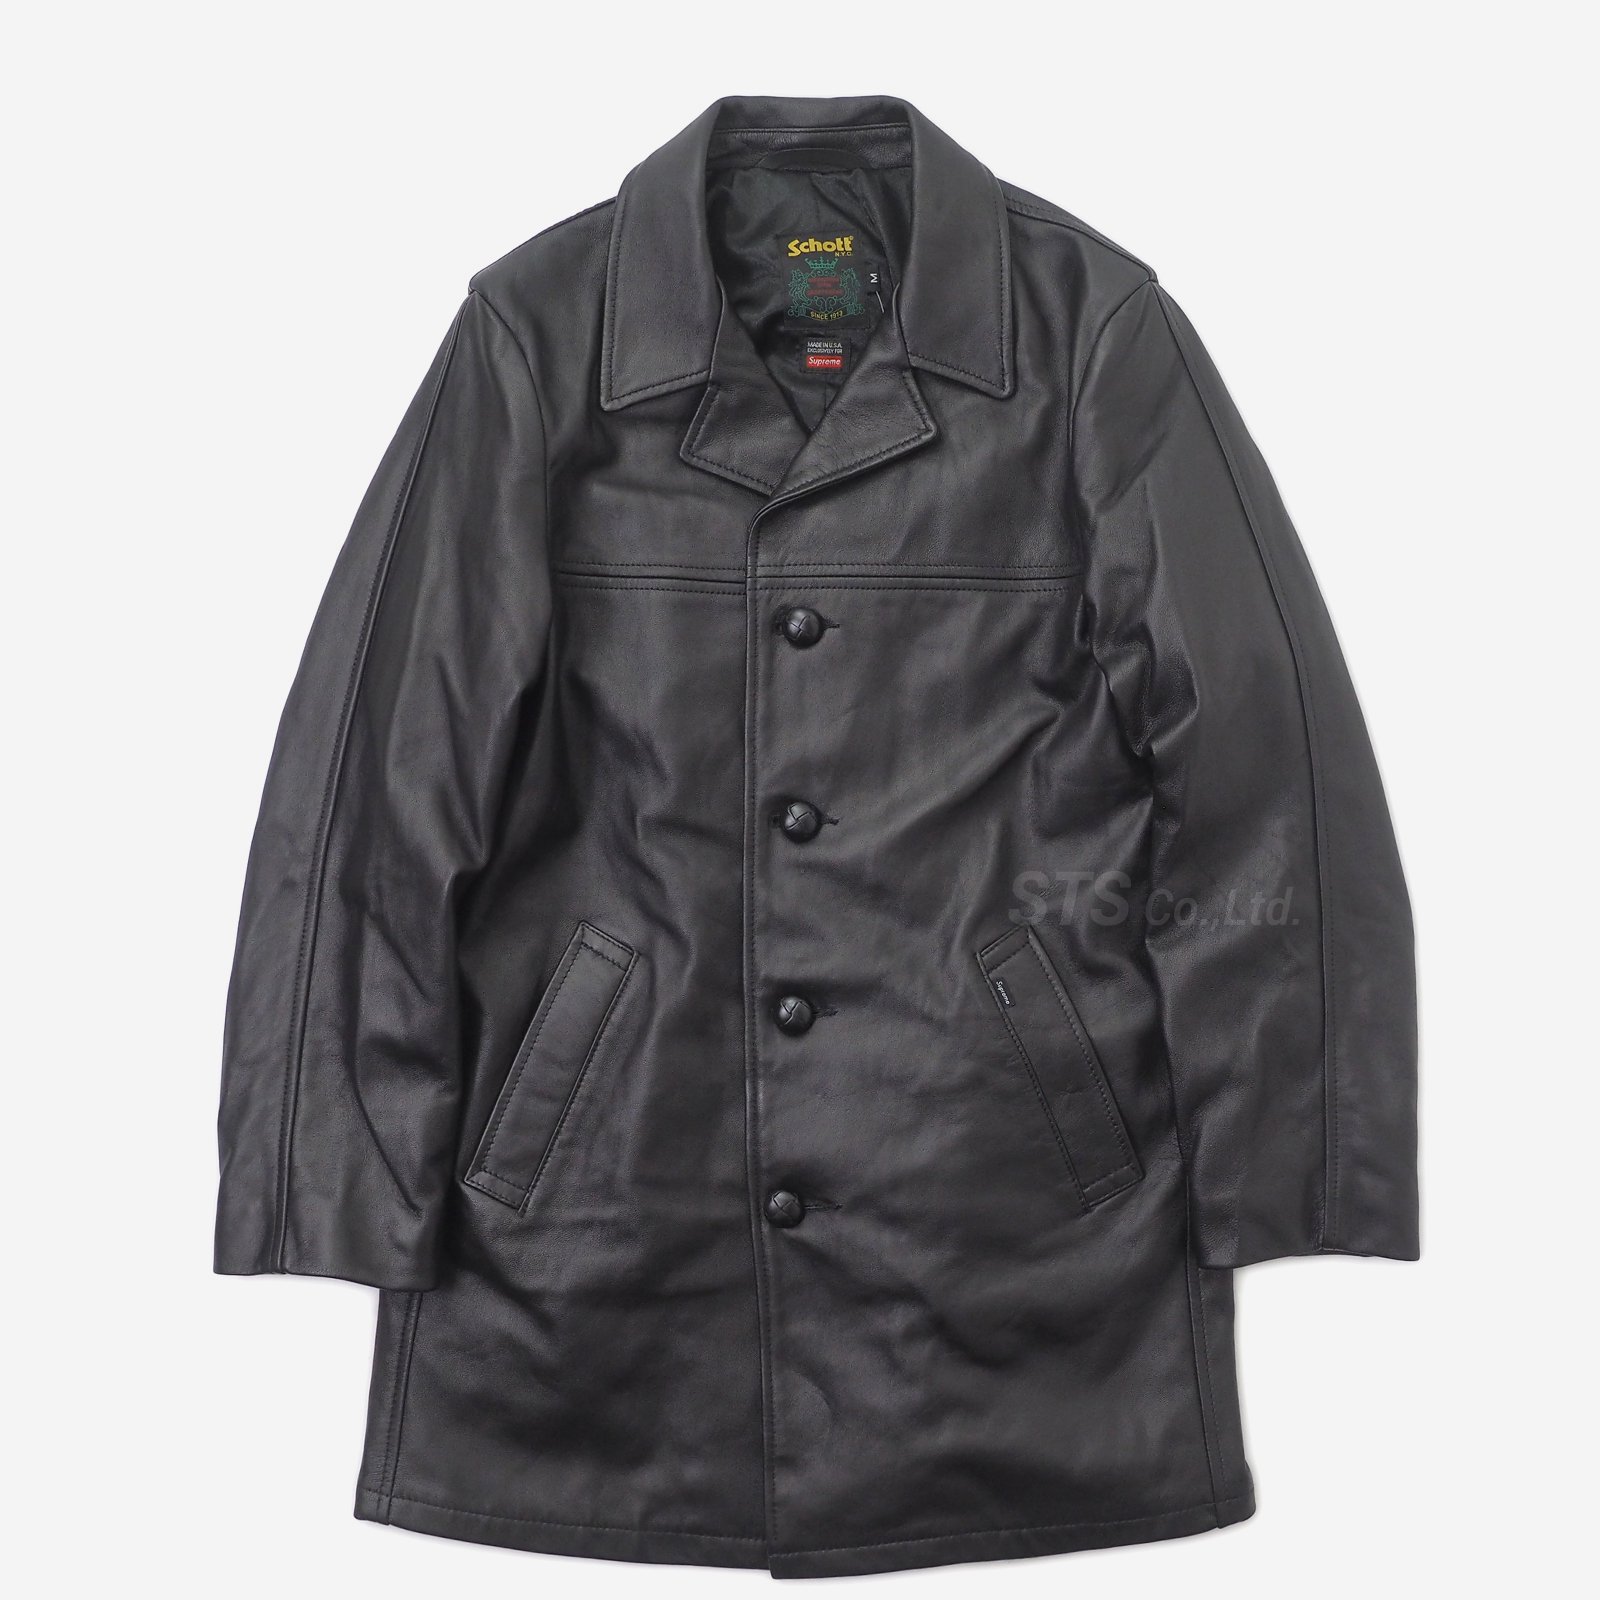 Supreme/Schott Leather Overcoat - ParkSIDER